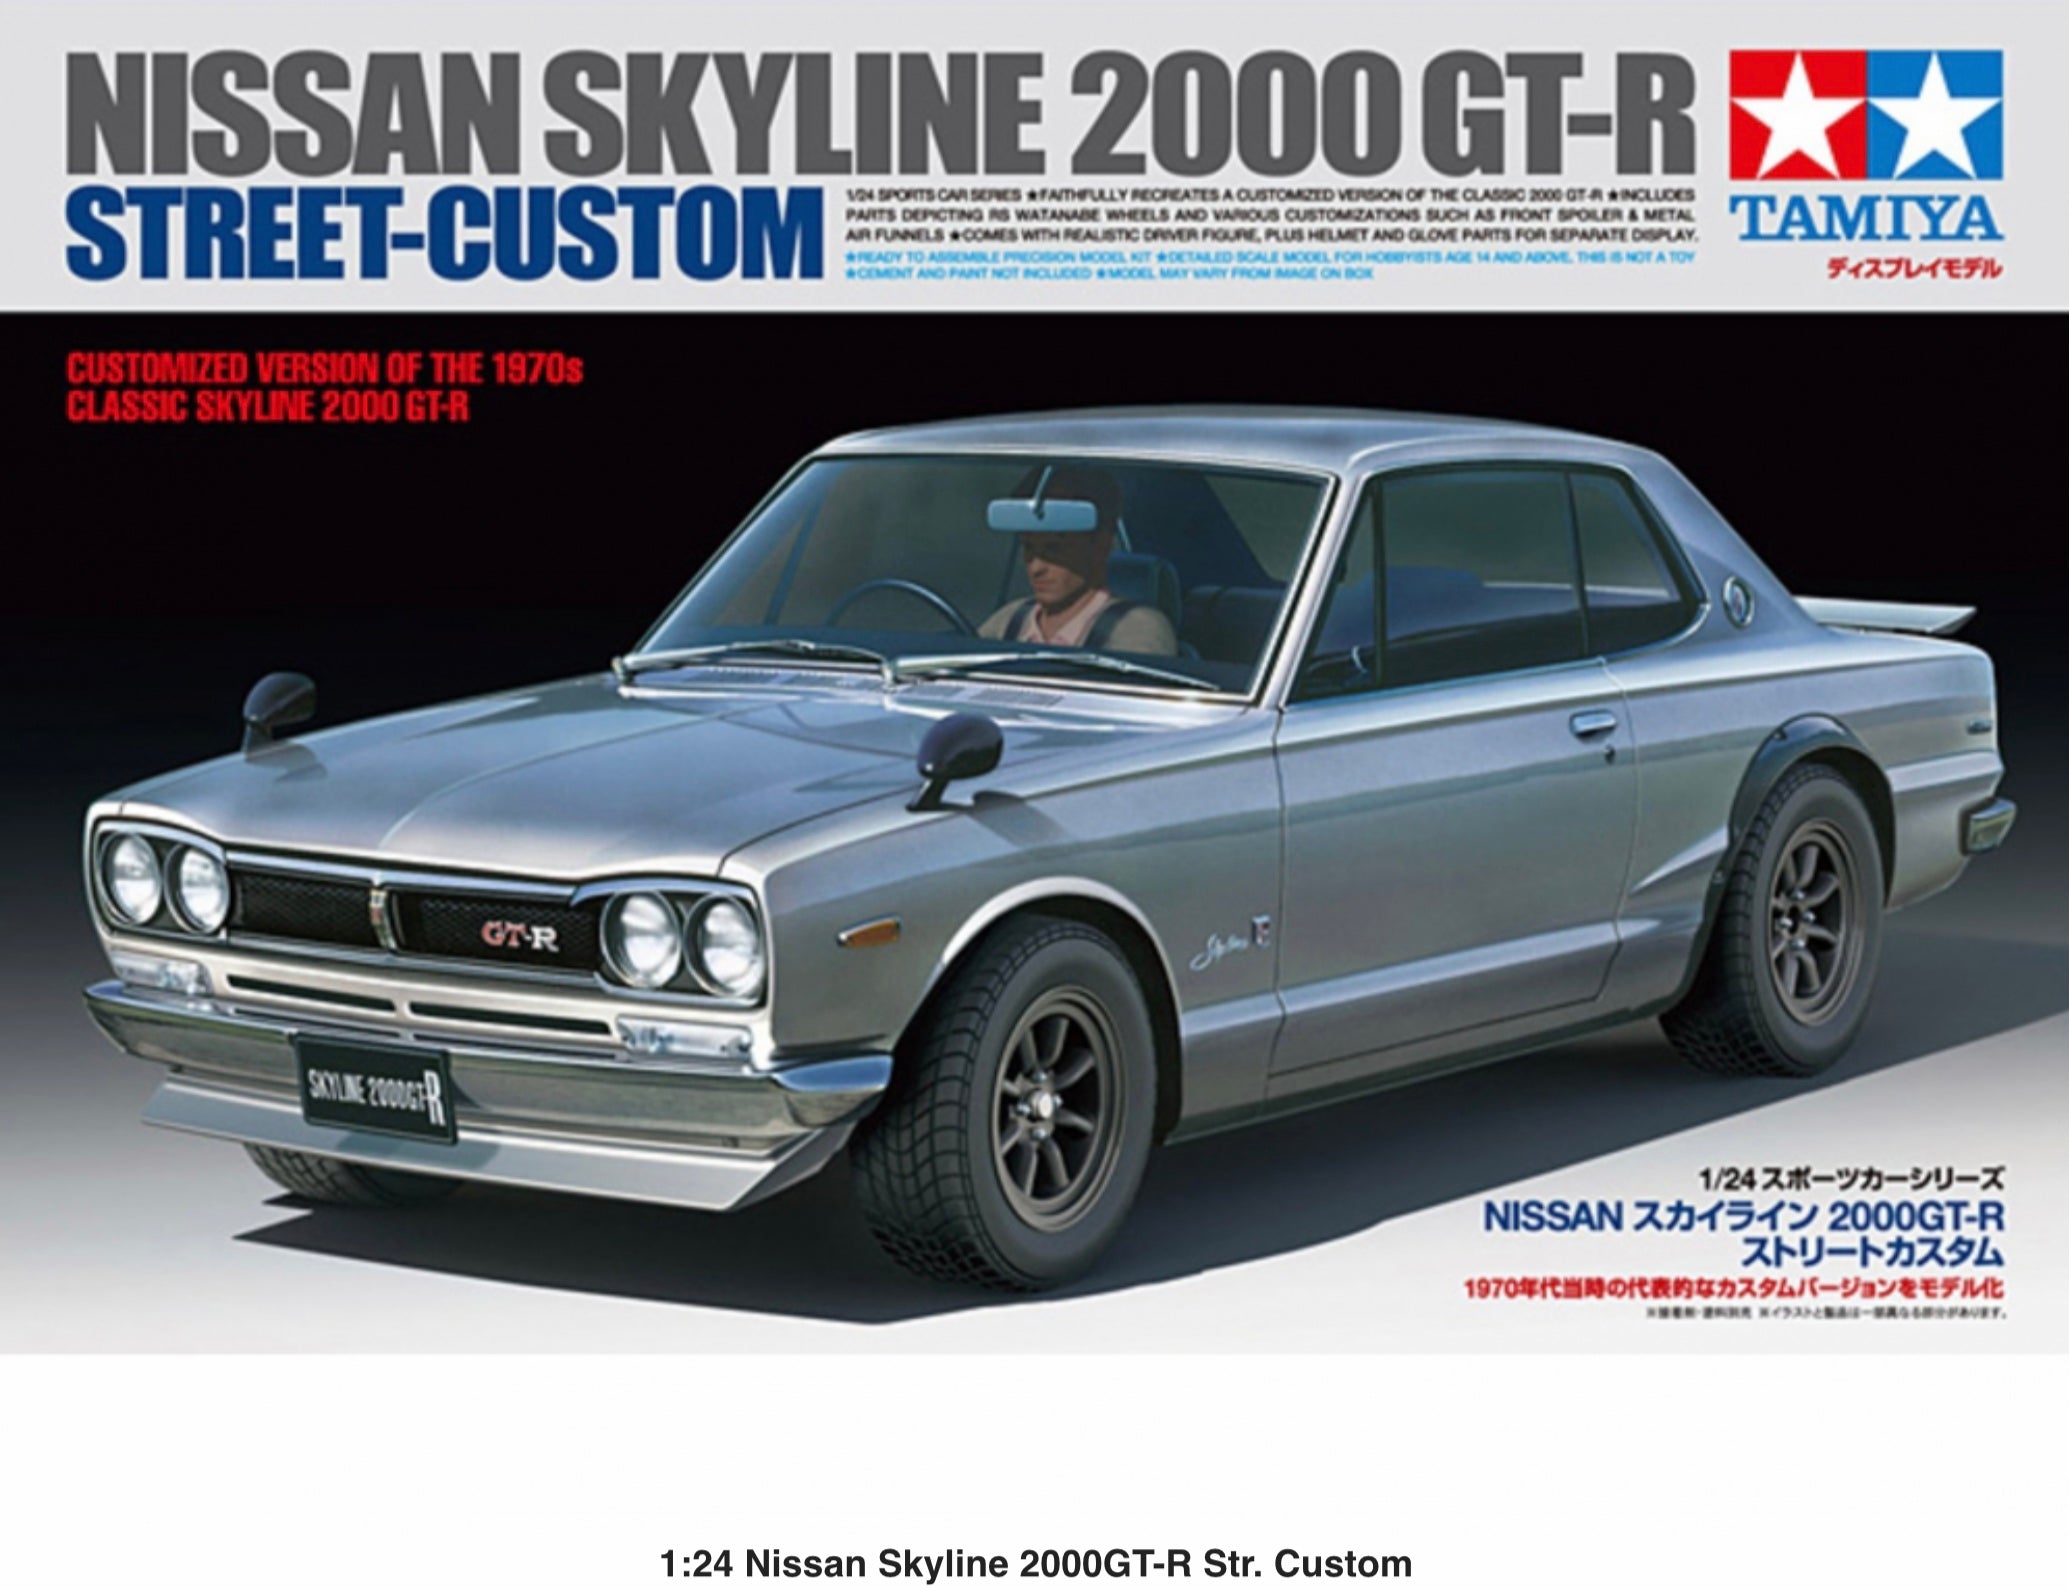 NISSAN SKYLINE 2000 GT-R STREET CUSTOM – dmodelkits